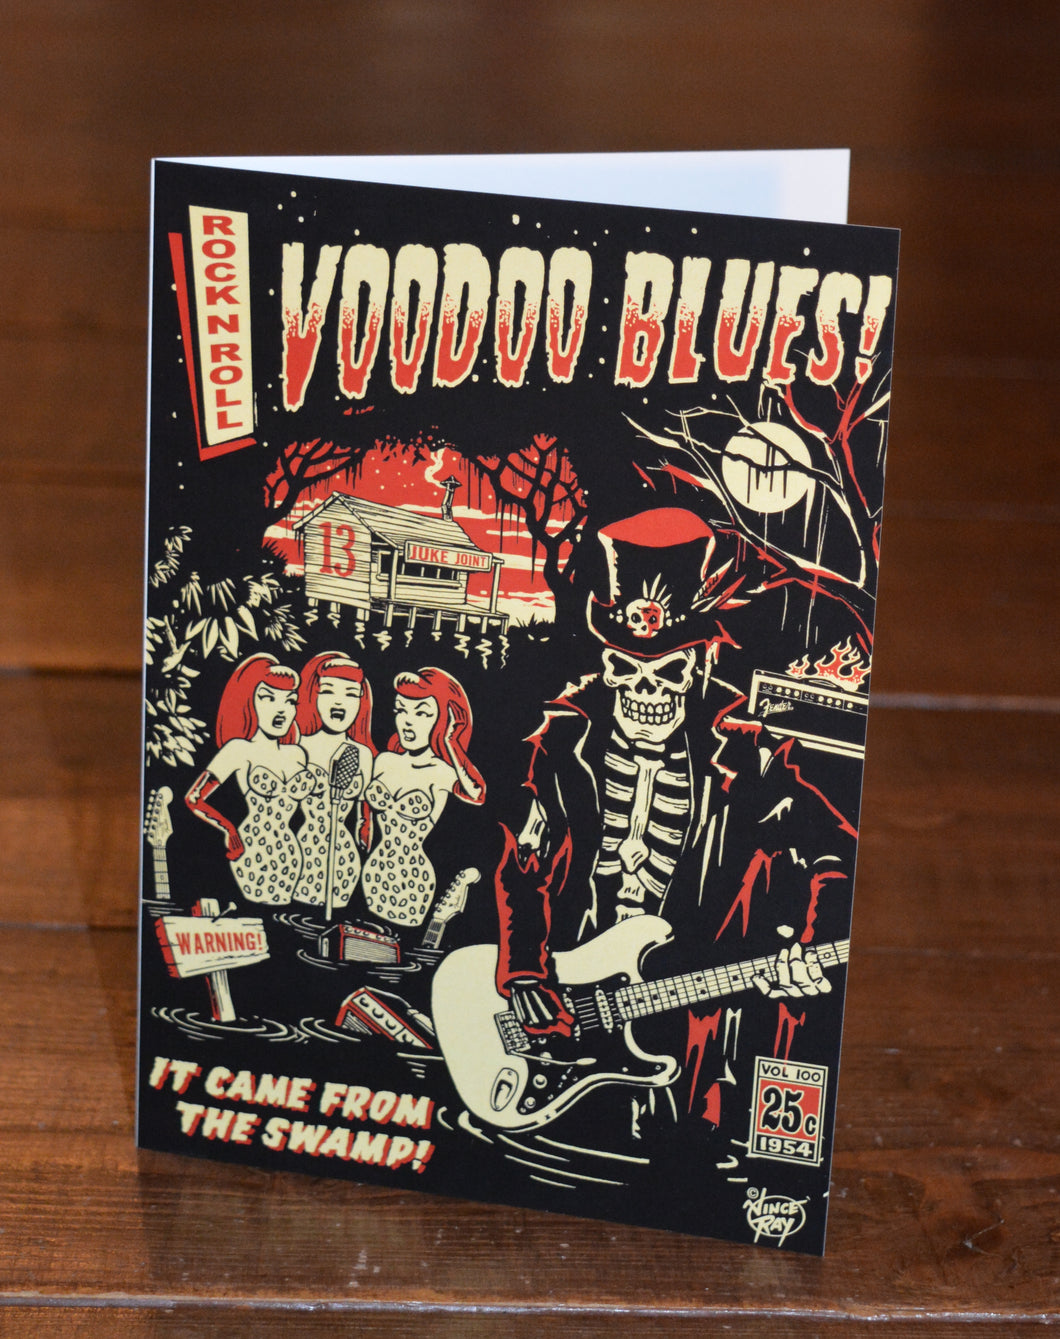 Voodoo Blues greetings card by Vince Ray